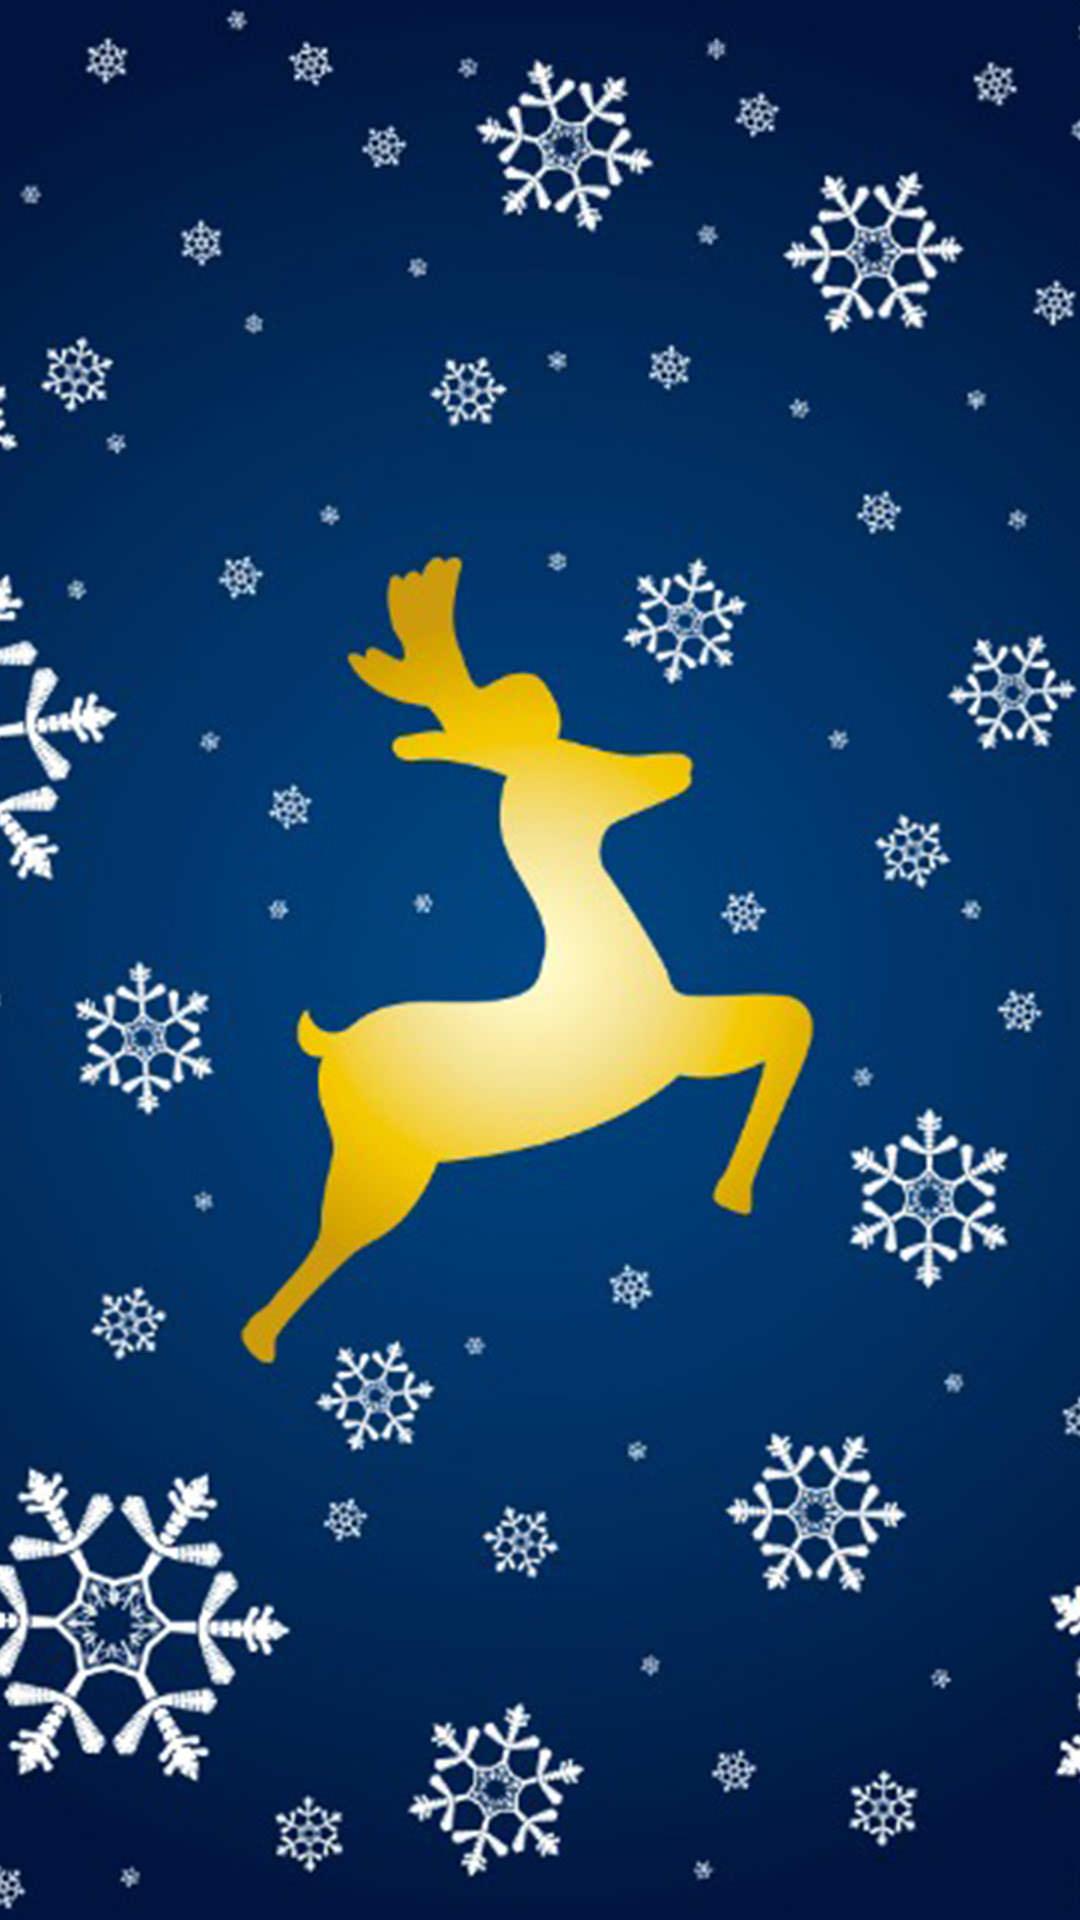 Christmas reindeer. wallpaper.sc iPhone8Plus